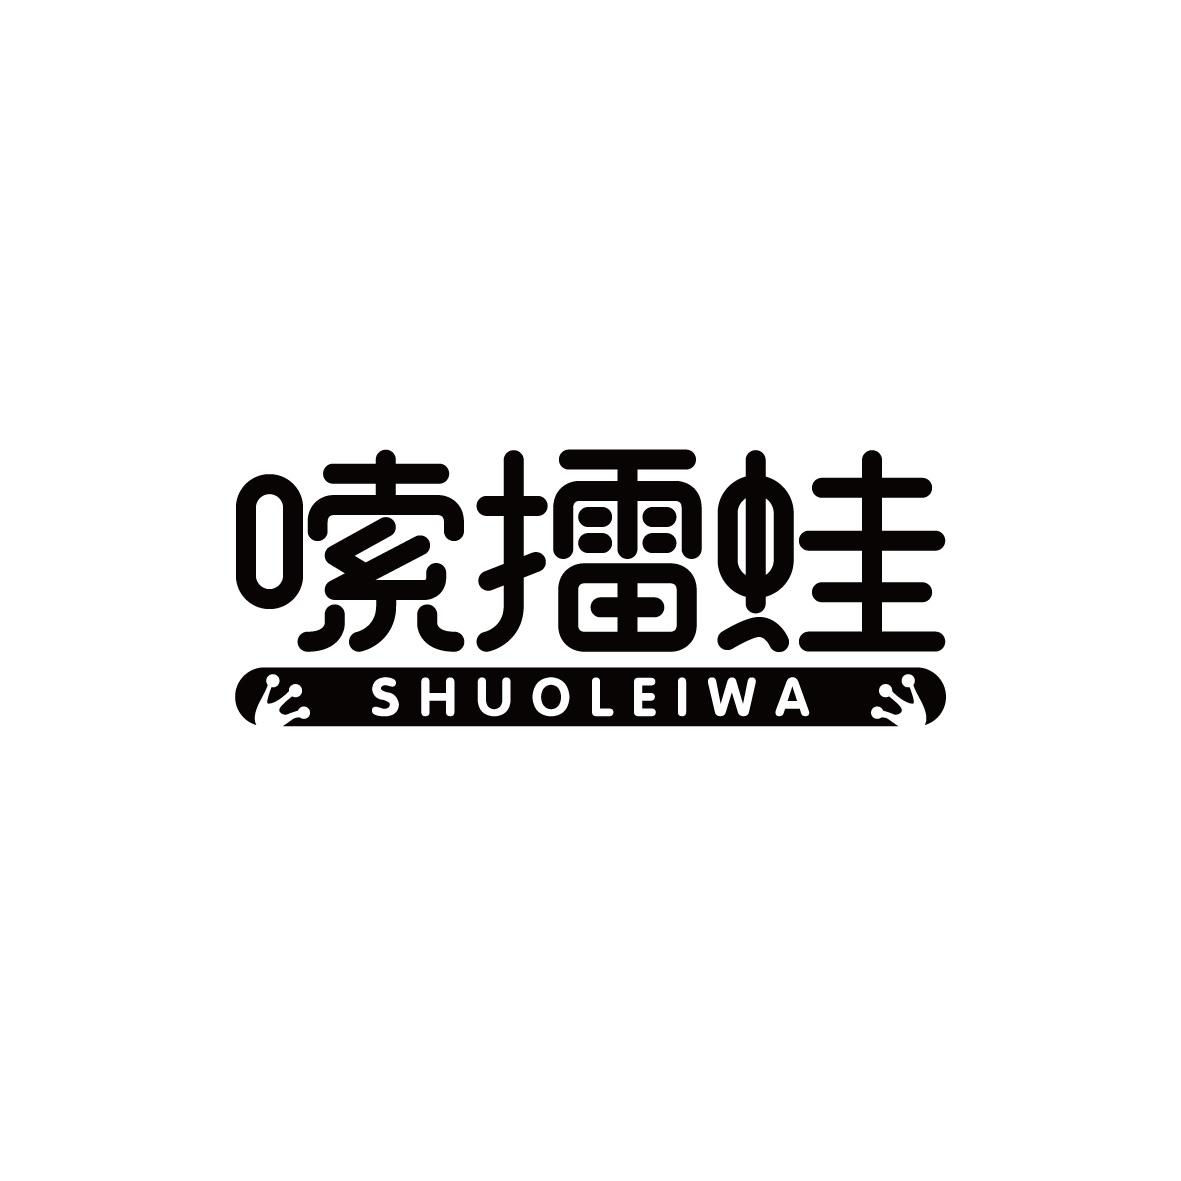 43类-餐饮住宿嗦擂蛙 SHUOLEIWA商标转让